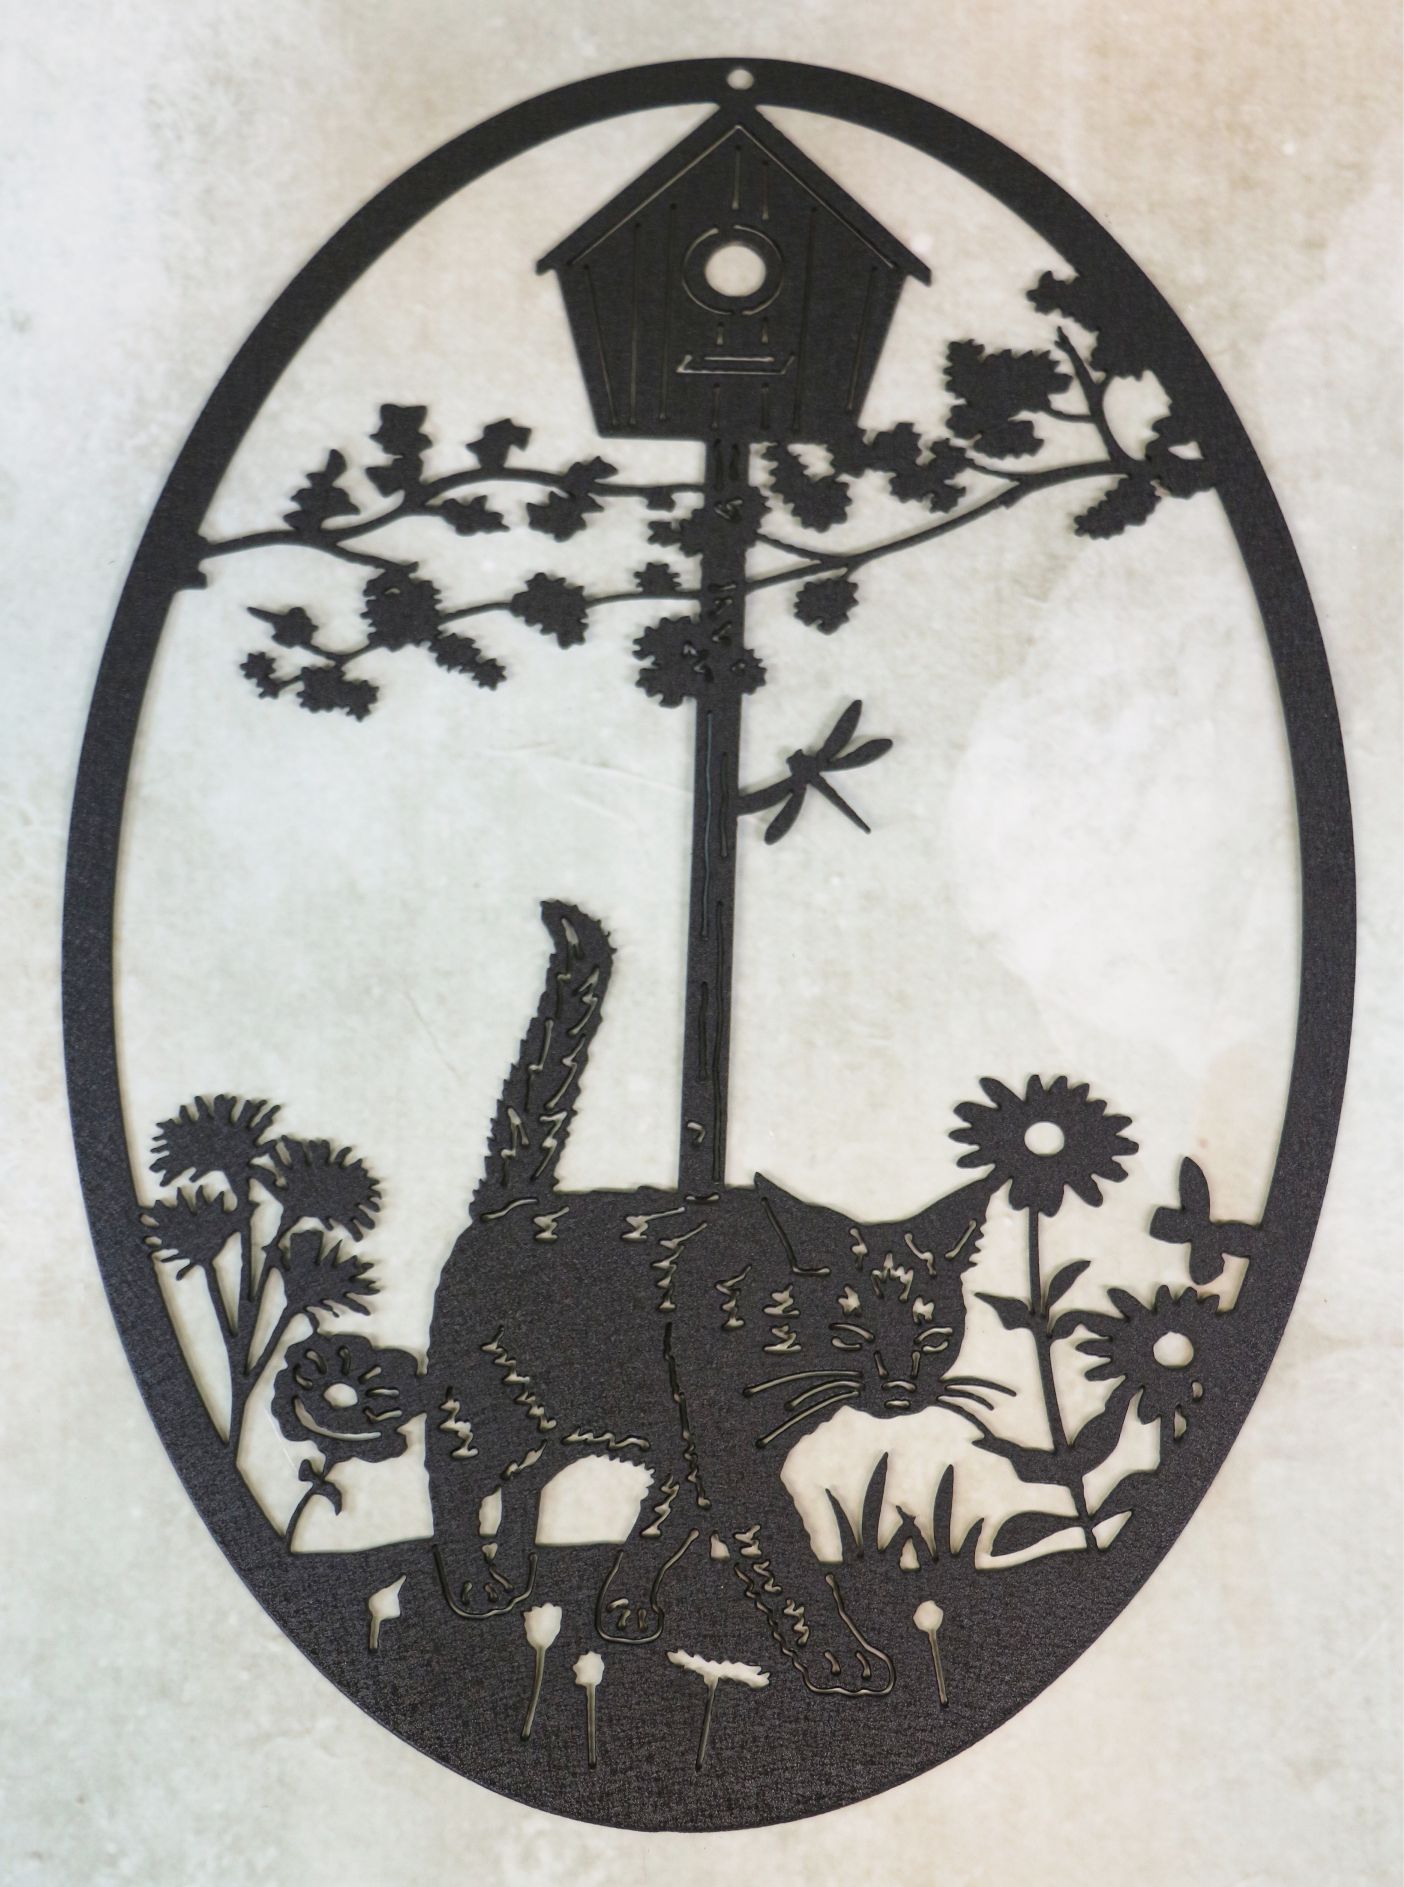 Wall Metal Art Oval, Black Cat, Garden, Birdhouse, Dragonfly, Flowers, Grass, Tree Branches